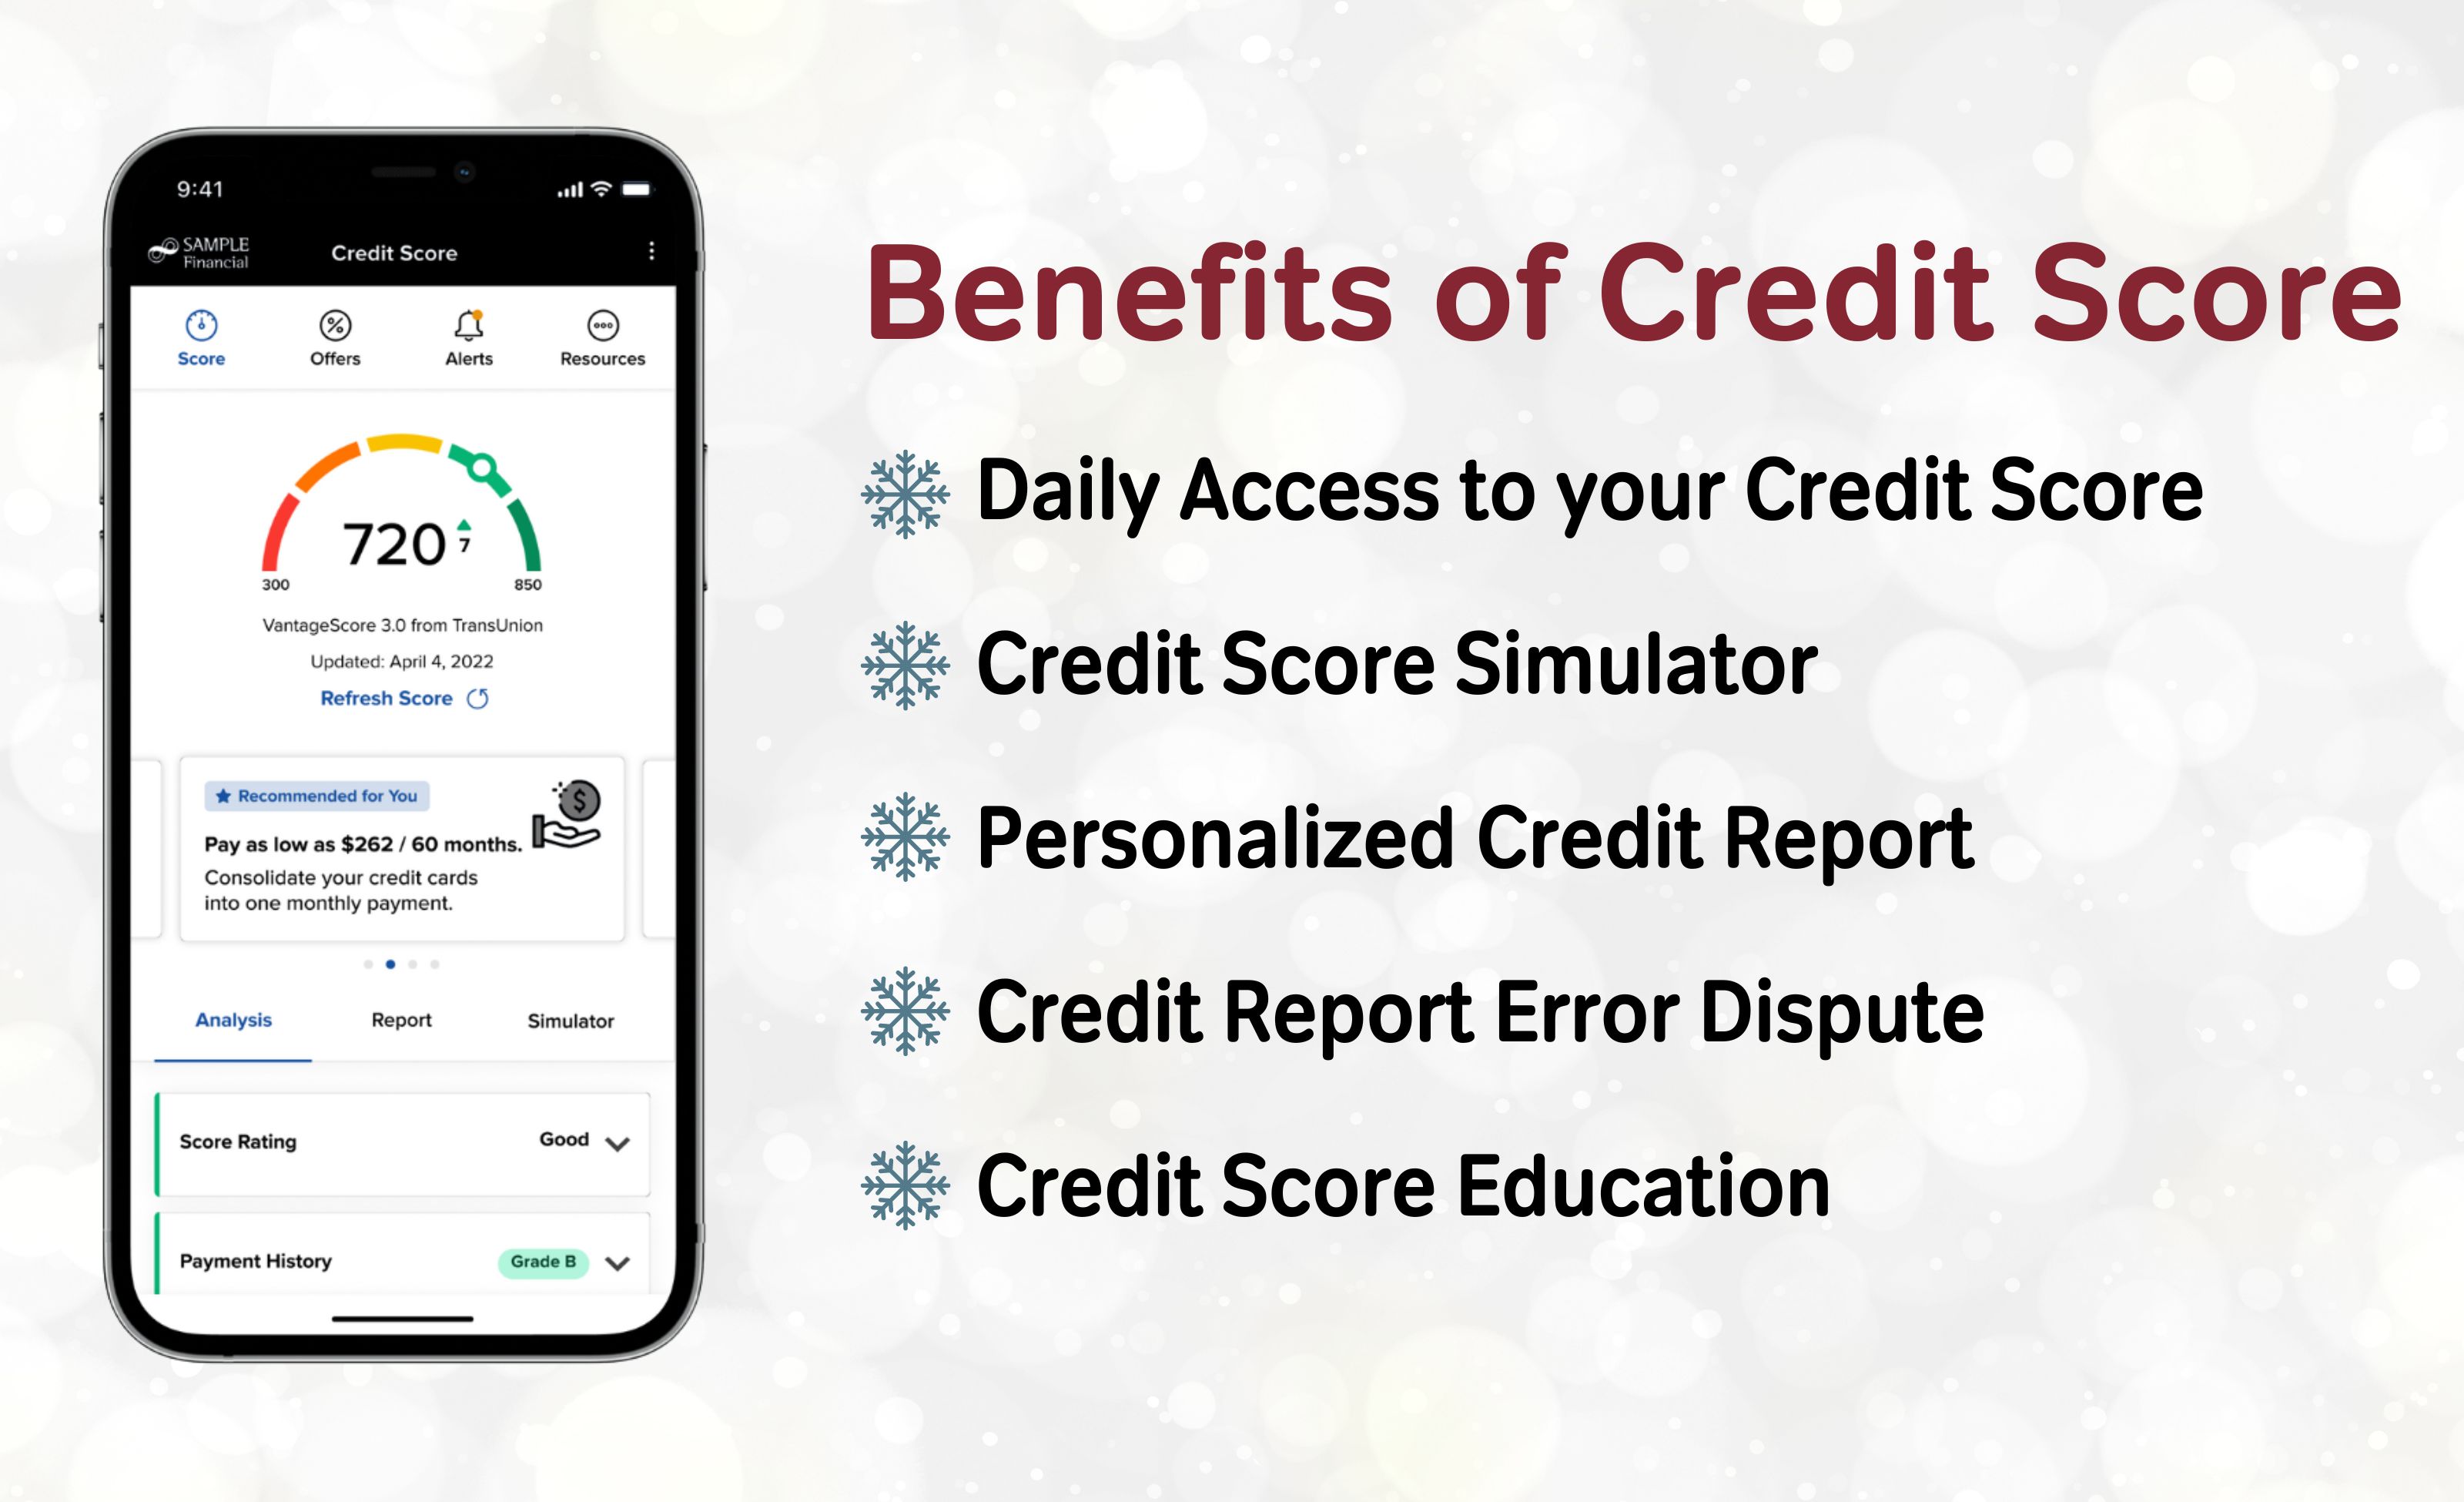 Benefits of Credit Score